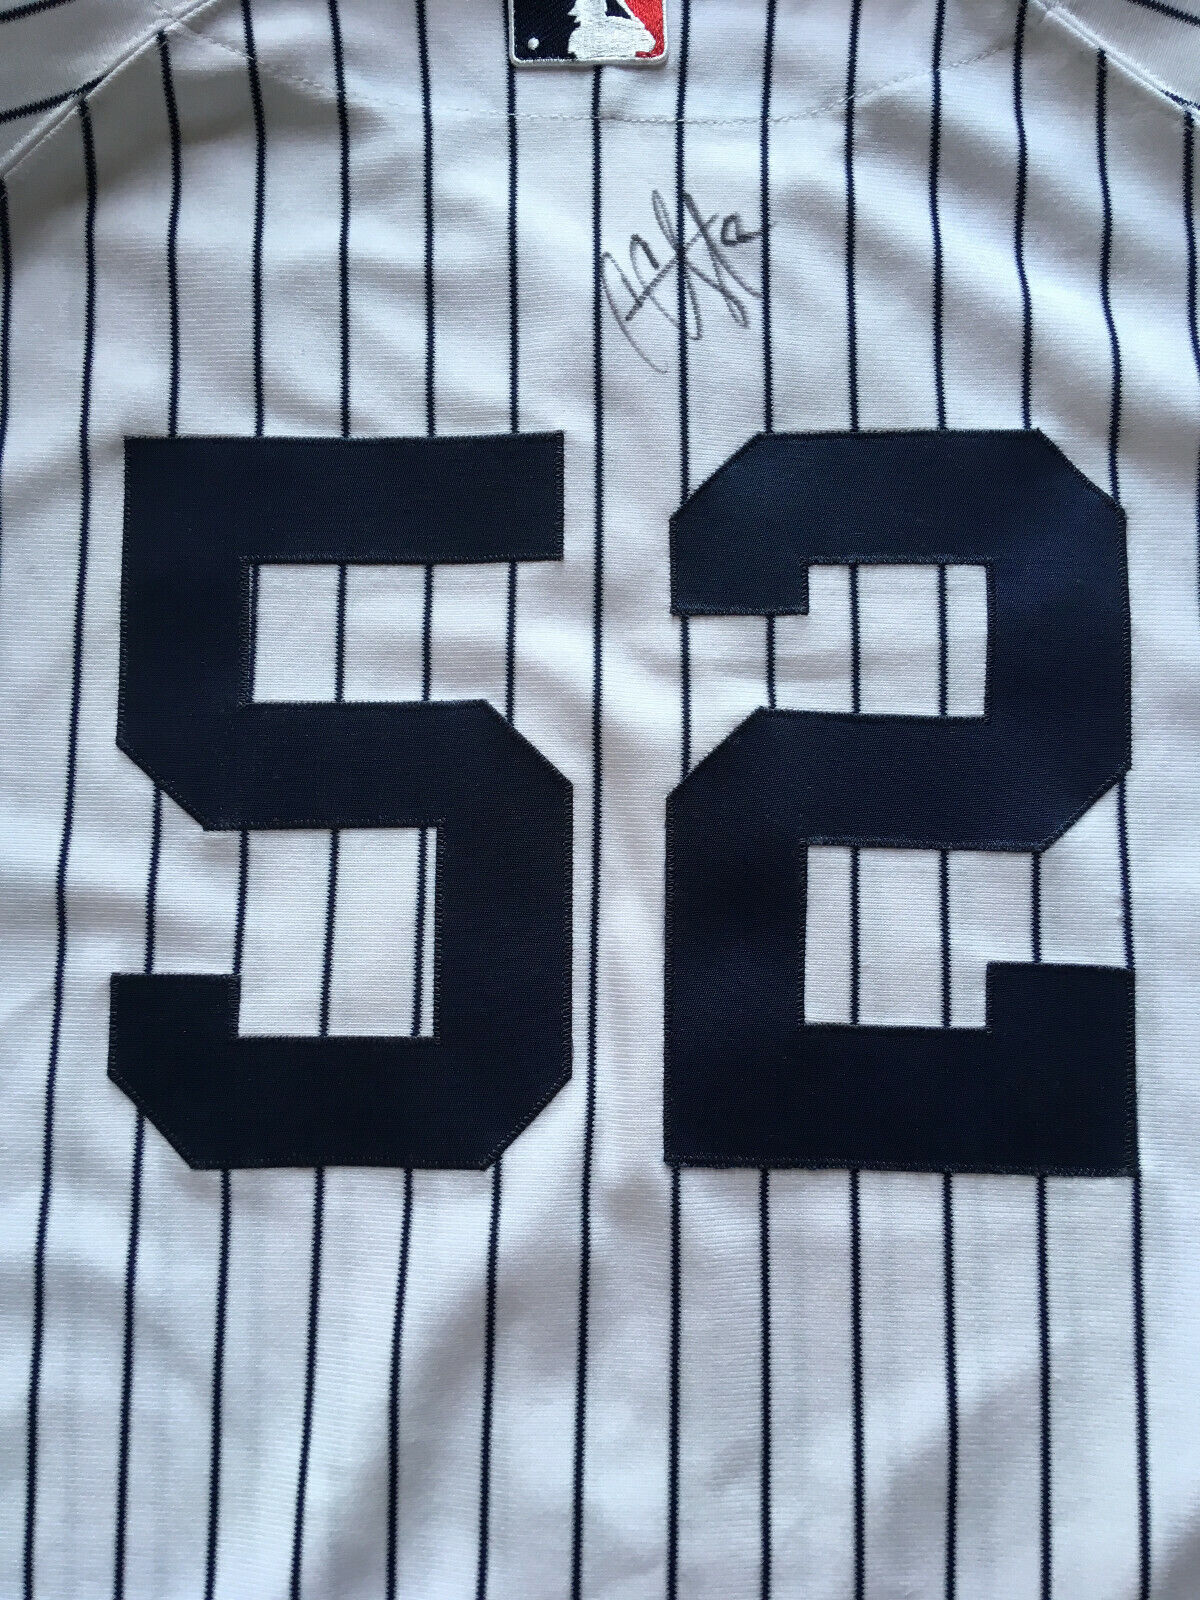 CC Sabathia signed Majestic Authentic 2009 Yankees WS Jersey Autograph –  CollectibleXchange